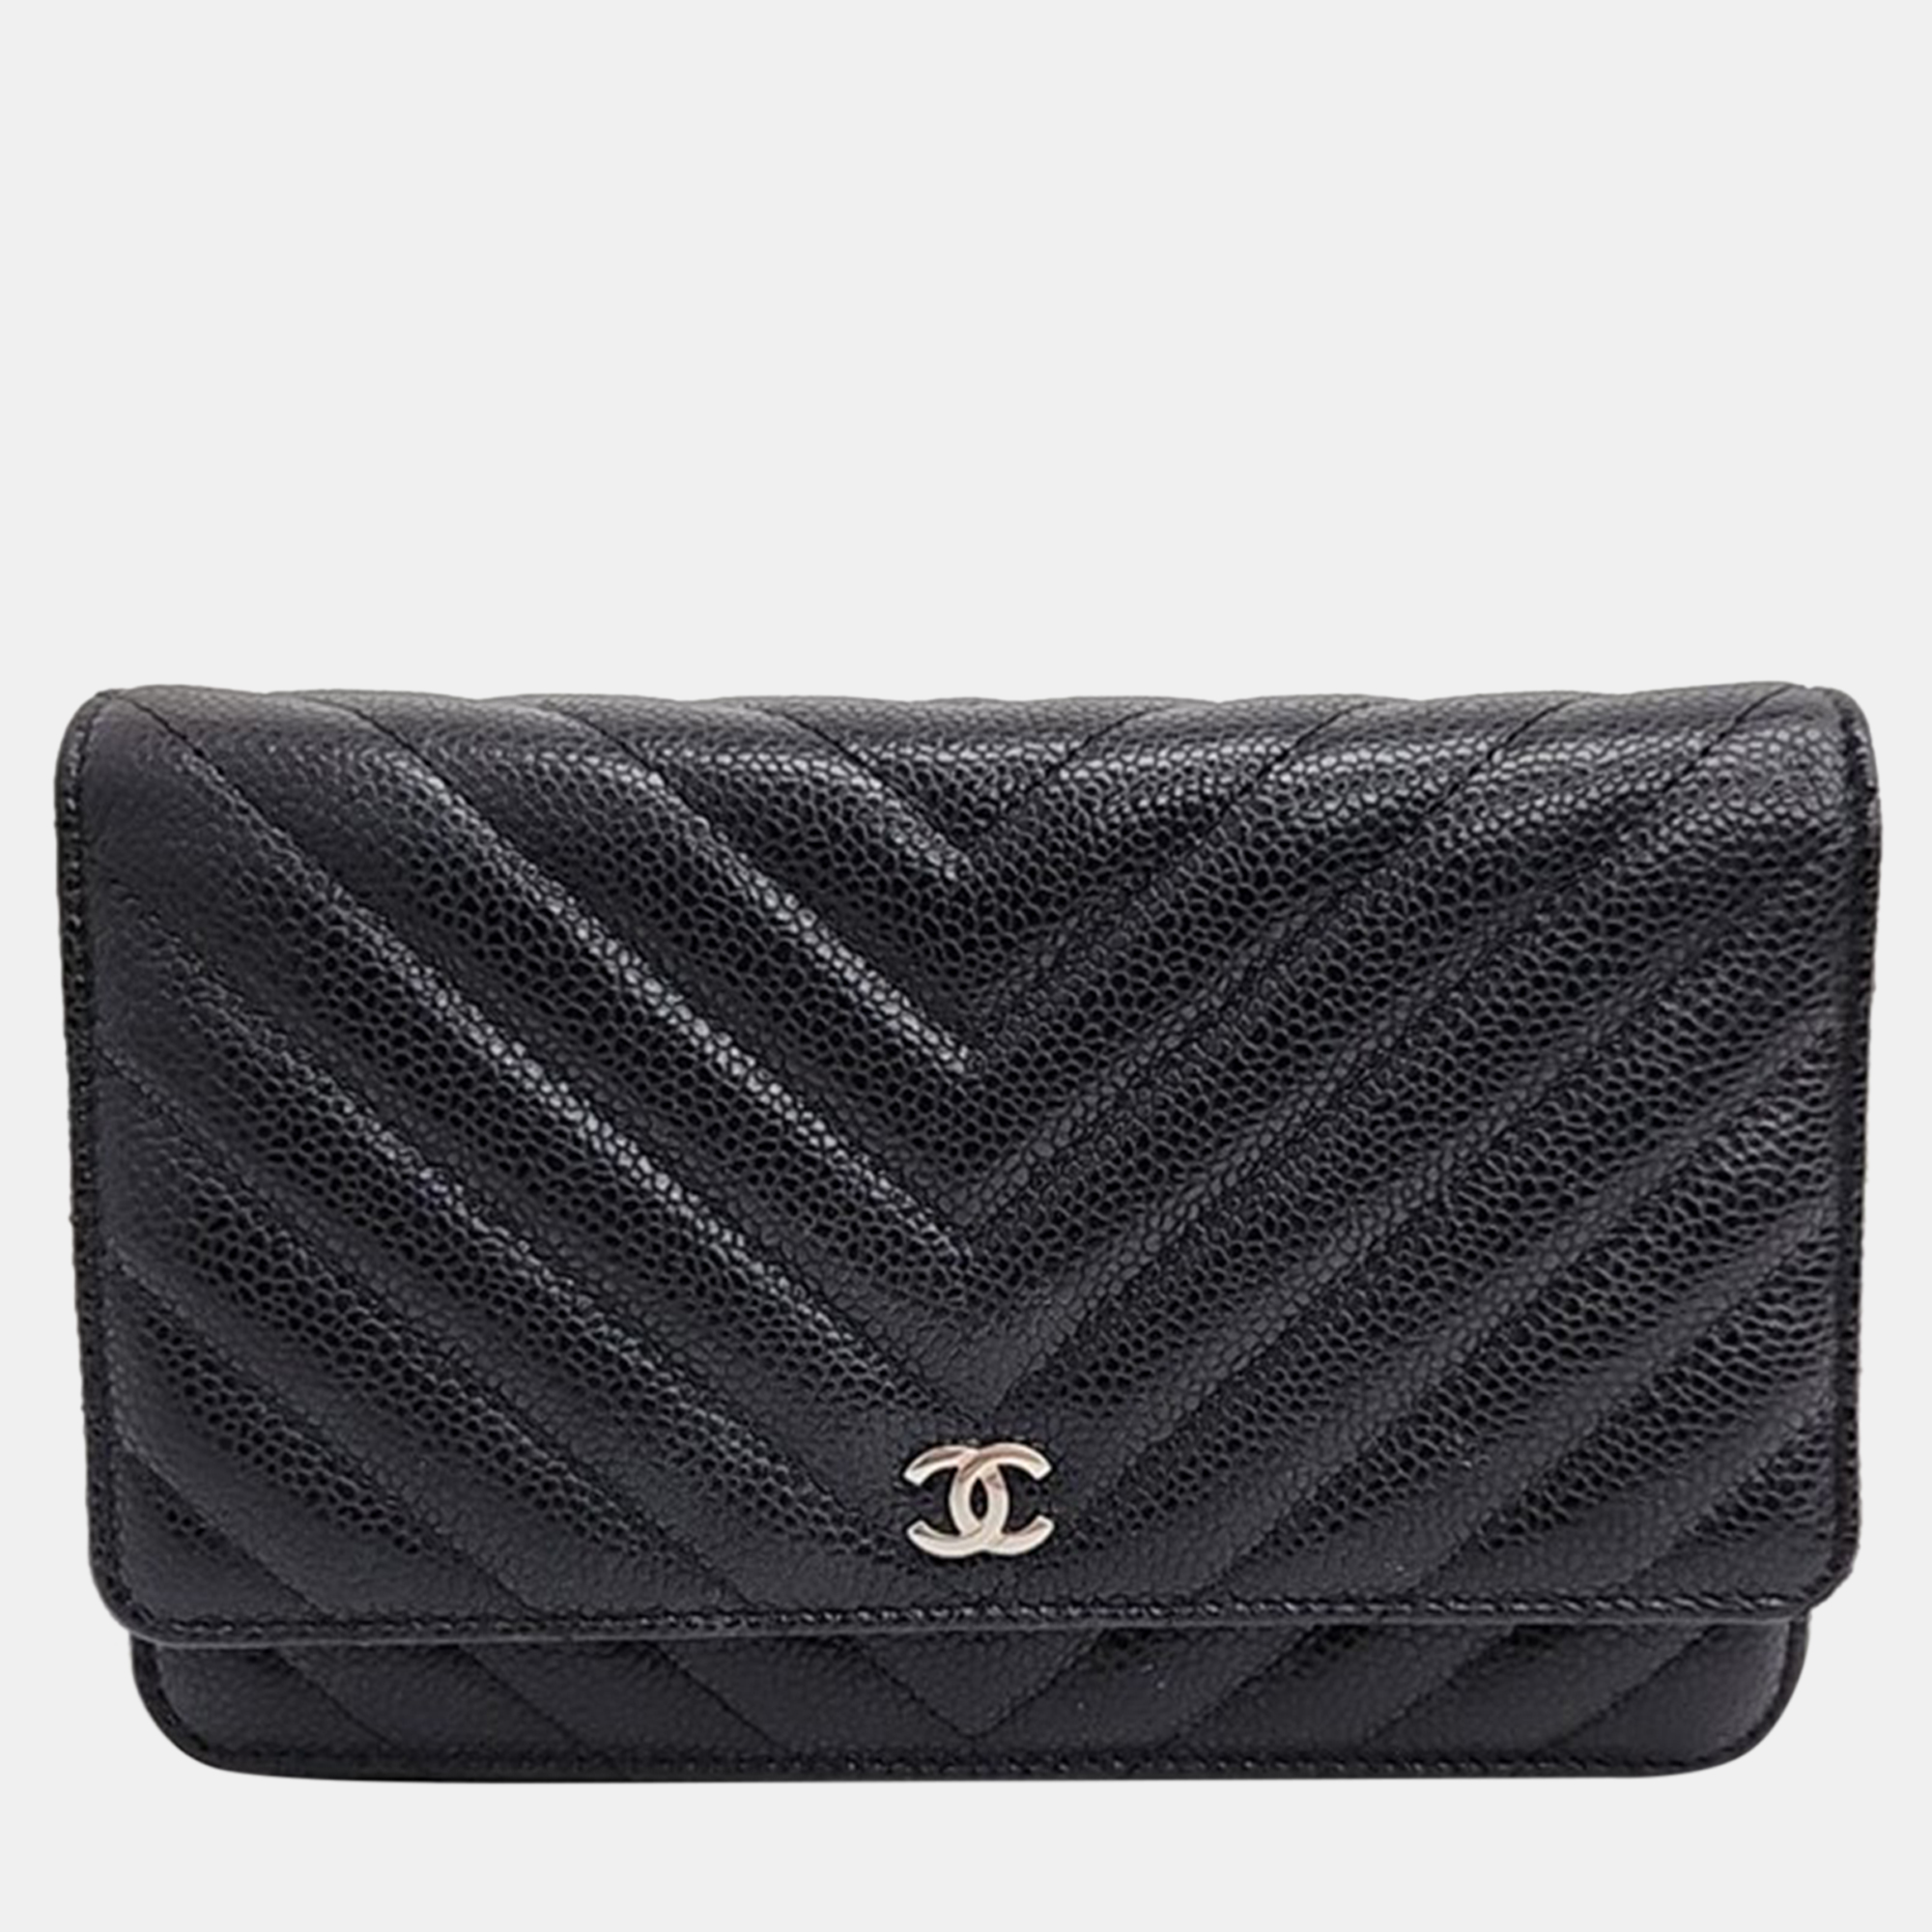 Chanel black caviar leather chevron wallet on chain